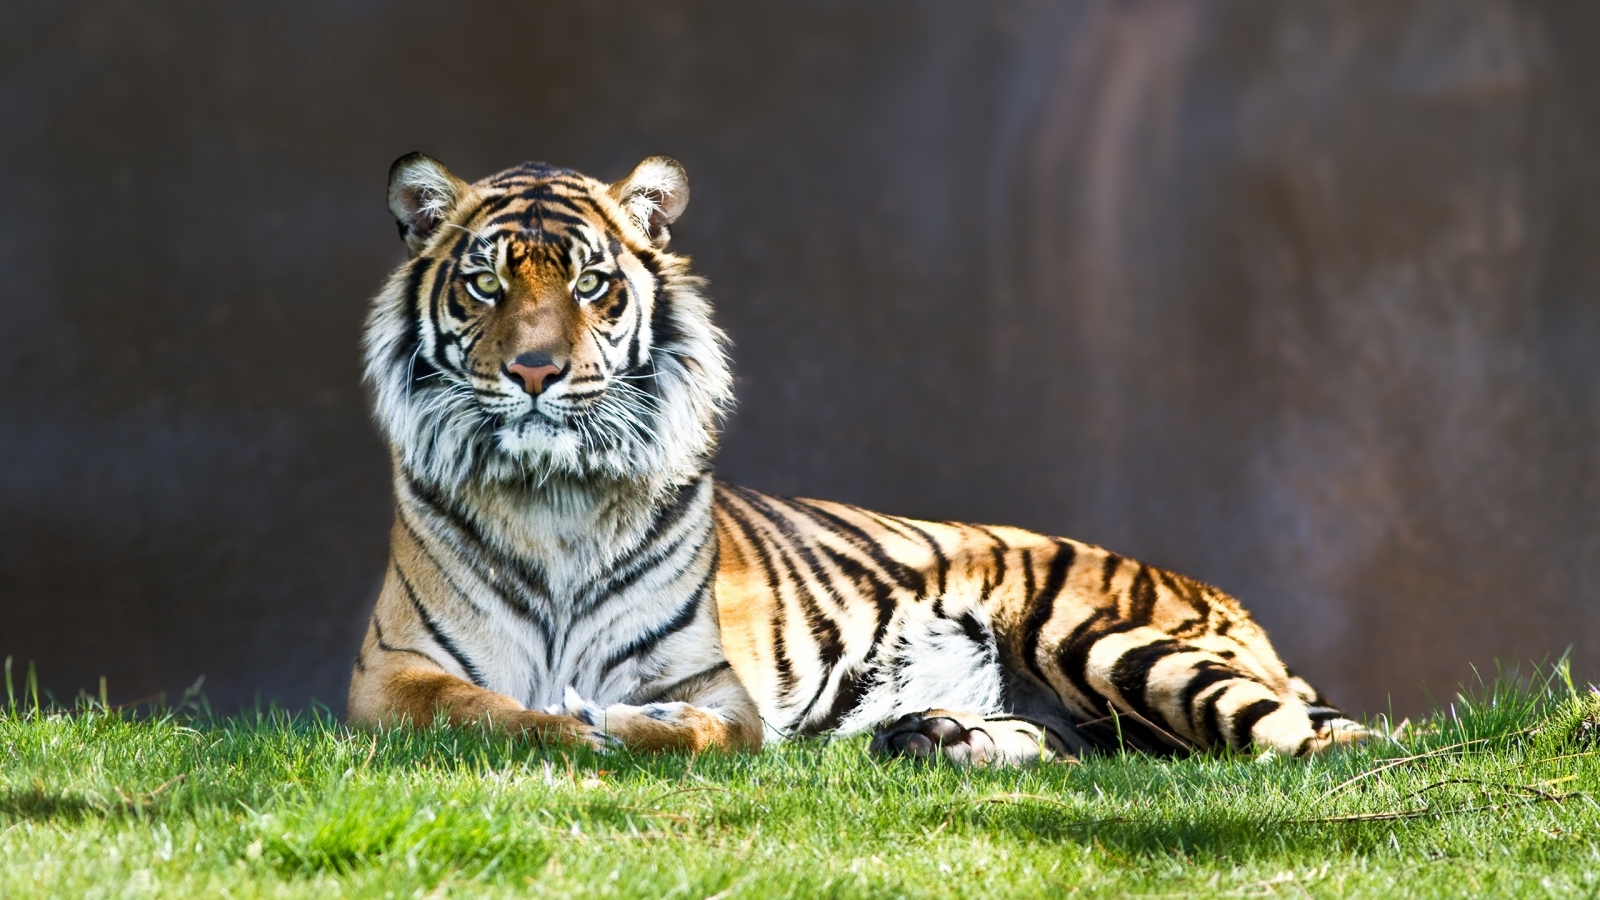 Tiger Thinking for 1600 x 900 HDTV resolution